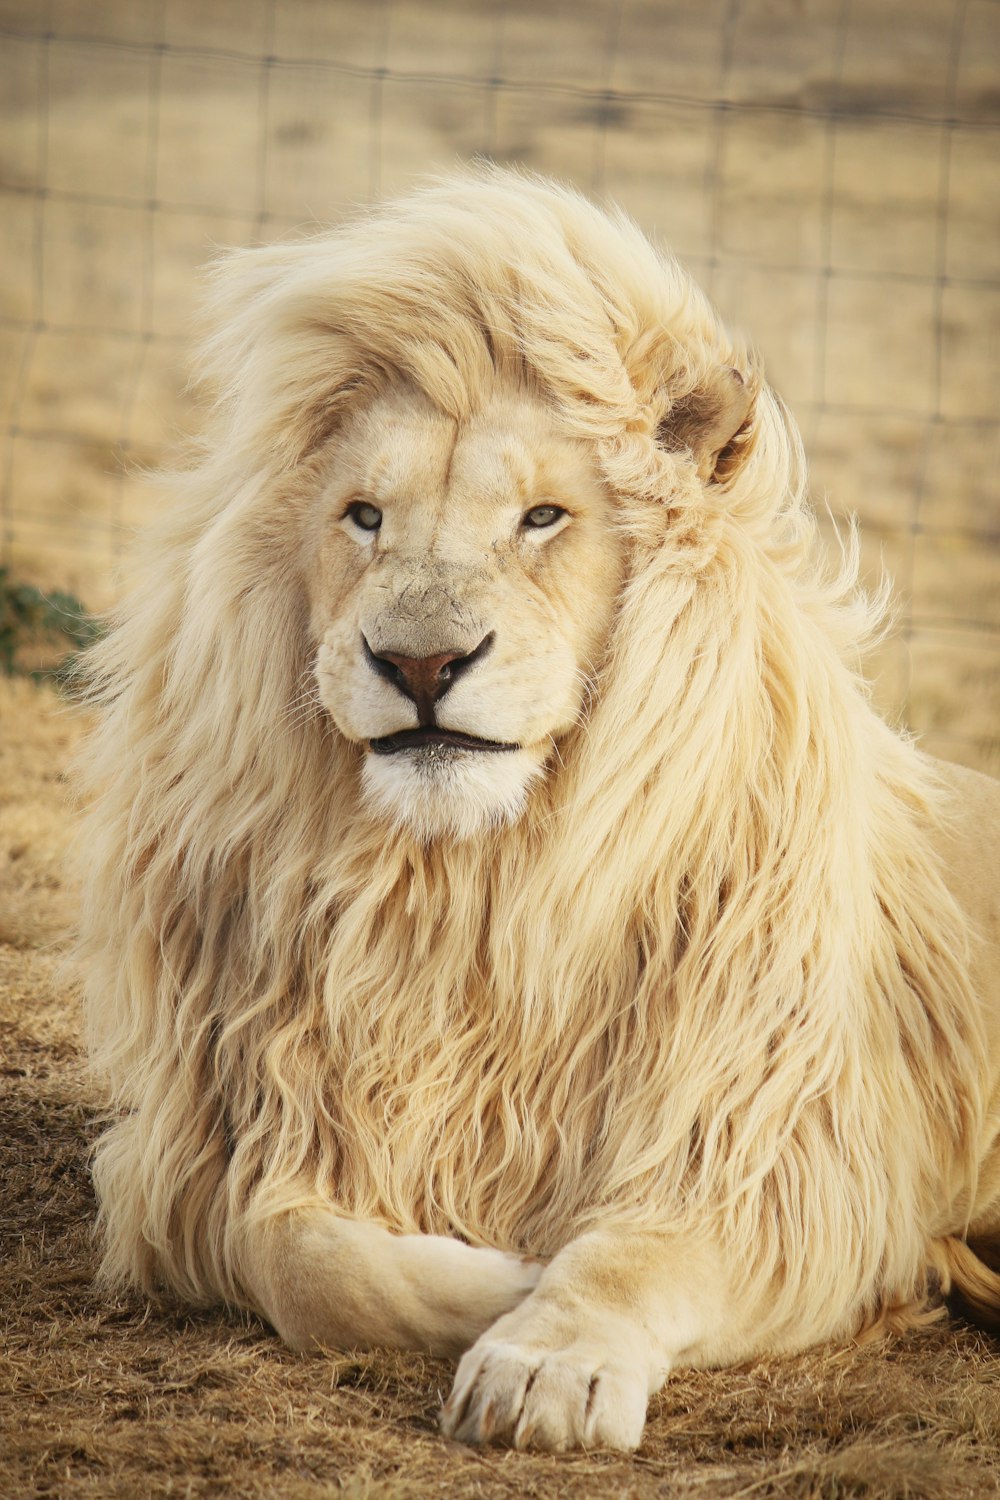 750+ Lion King Pictures | Download Free Images On Unsplash